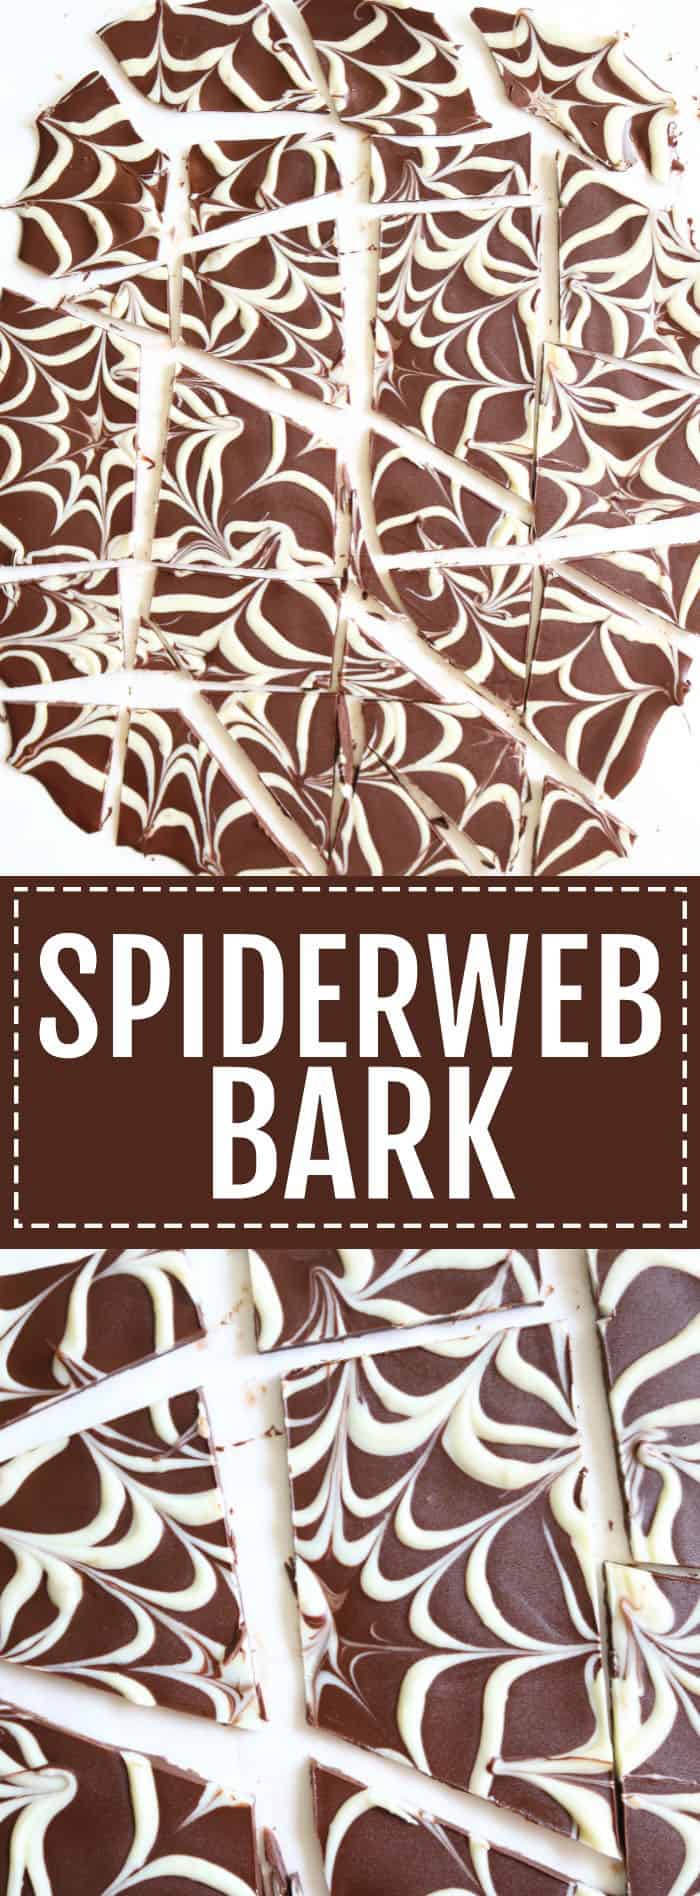 You'll LOVE this easy three ingredient recipe for Chocolate Spiderweb Bark! Such a simple and delicious gluten free Halloween treat! thetoastedpinenut.com #glutenfree #dessert #halloween